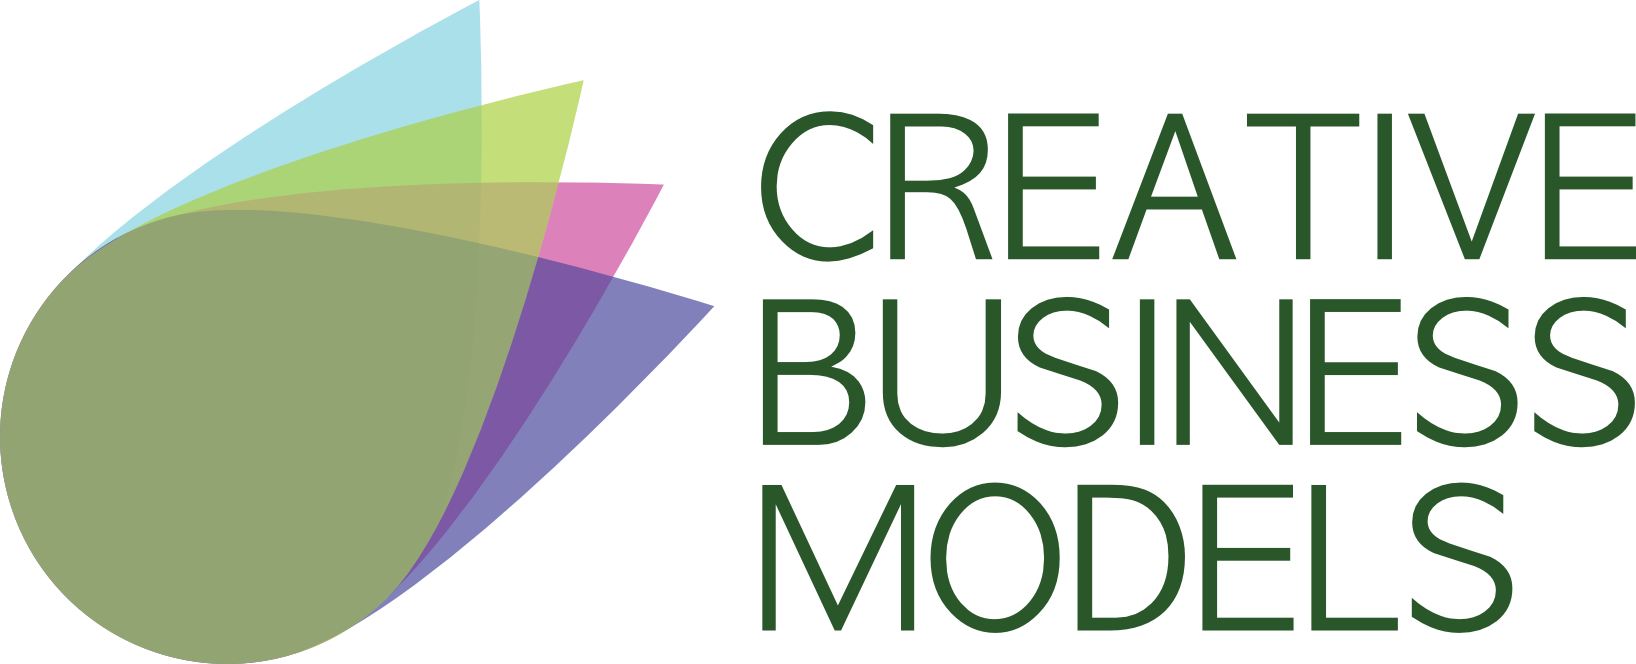 Creative Business Models